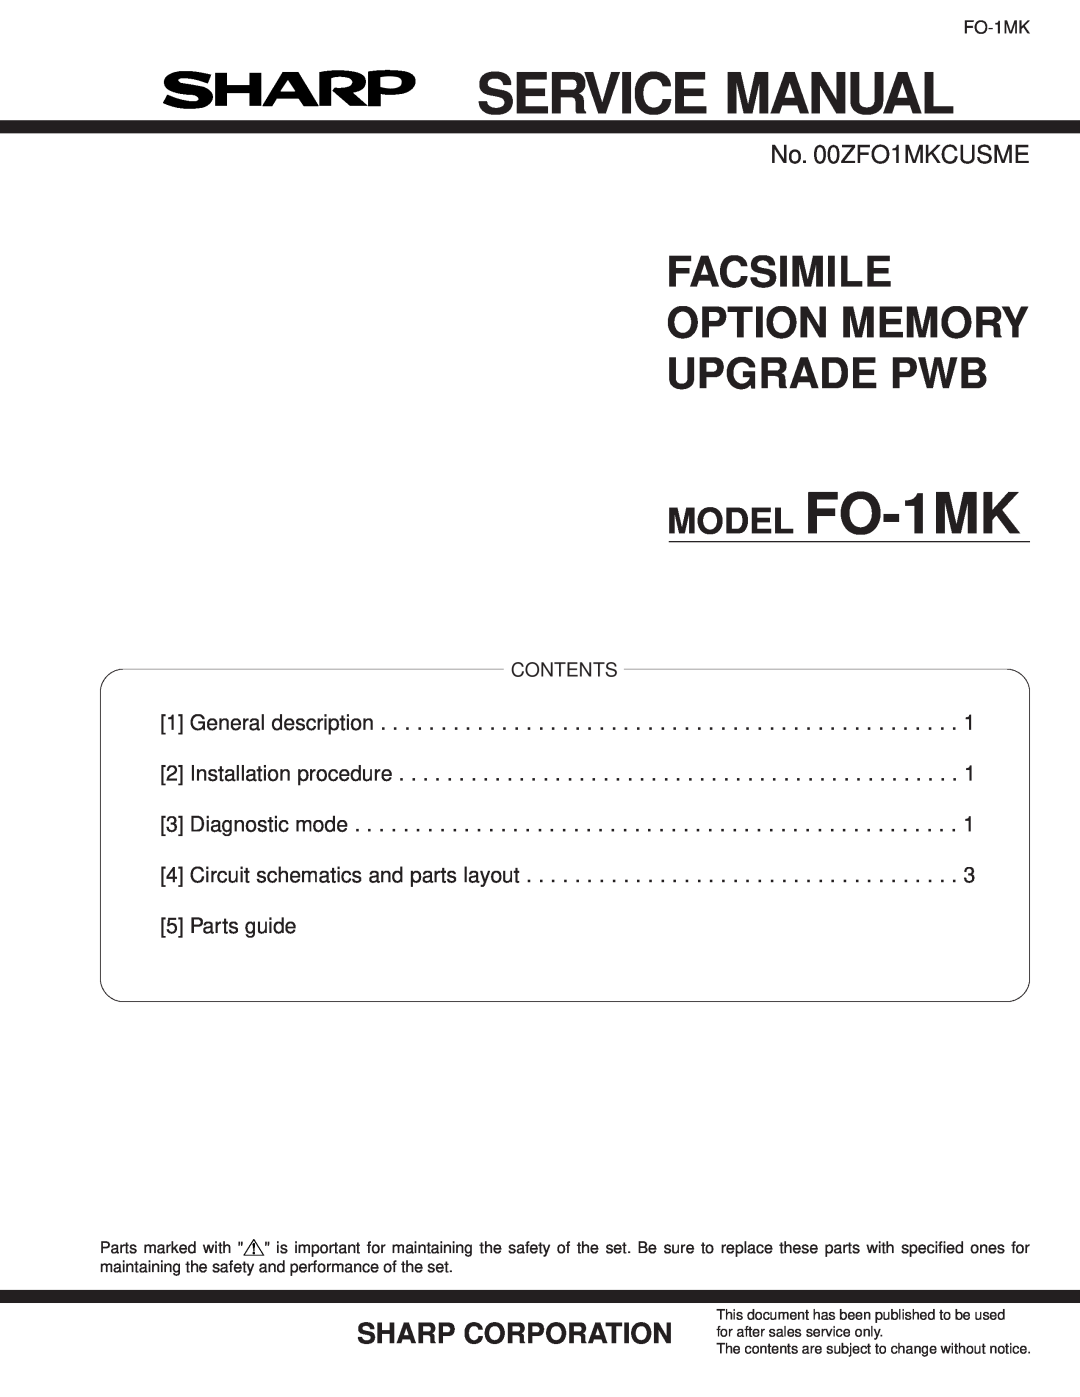 Sharp FO-1MK service manual General description 2 Installation procedure 3 Diagnostic mode, Contents, Service Manual 